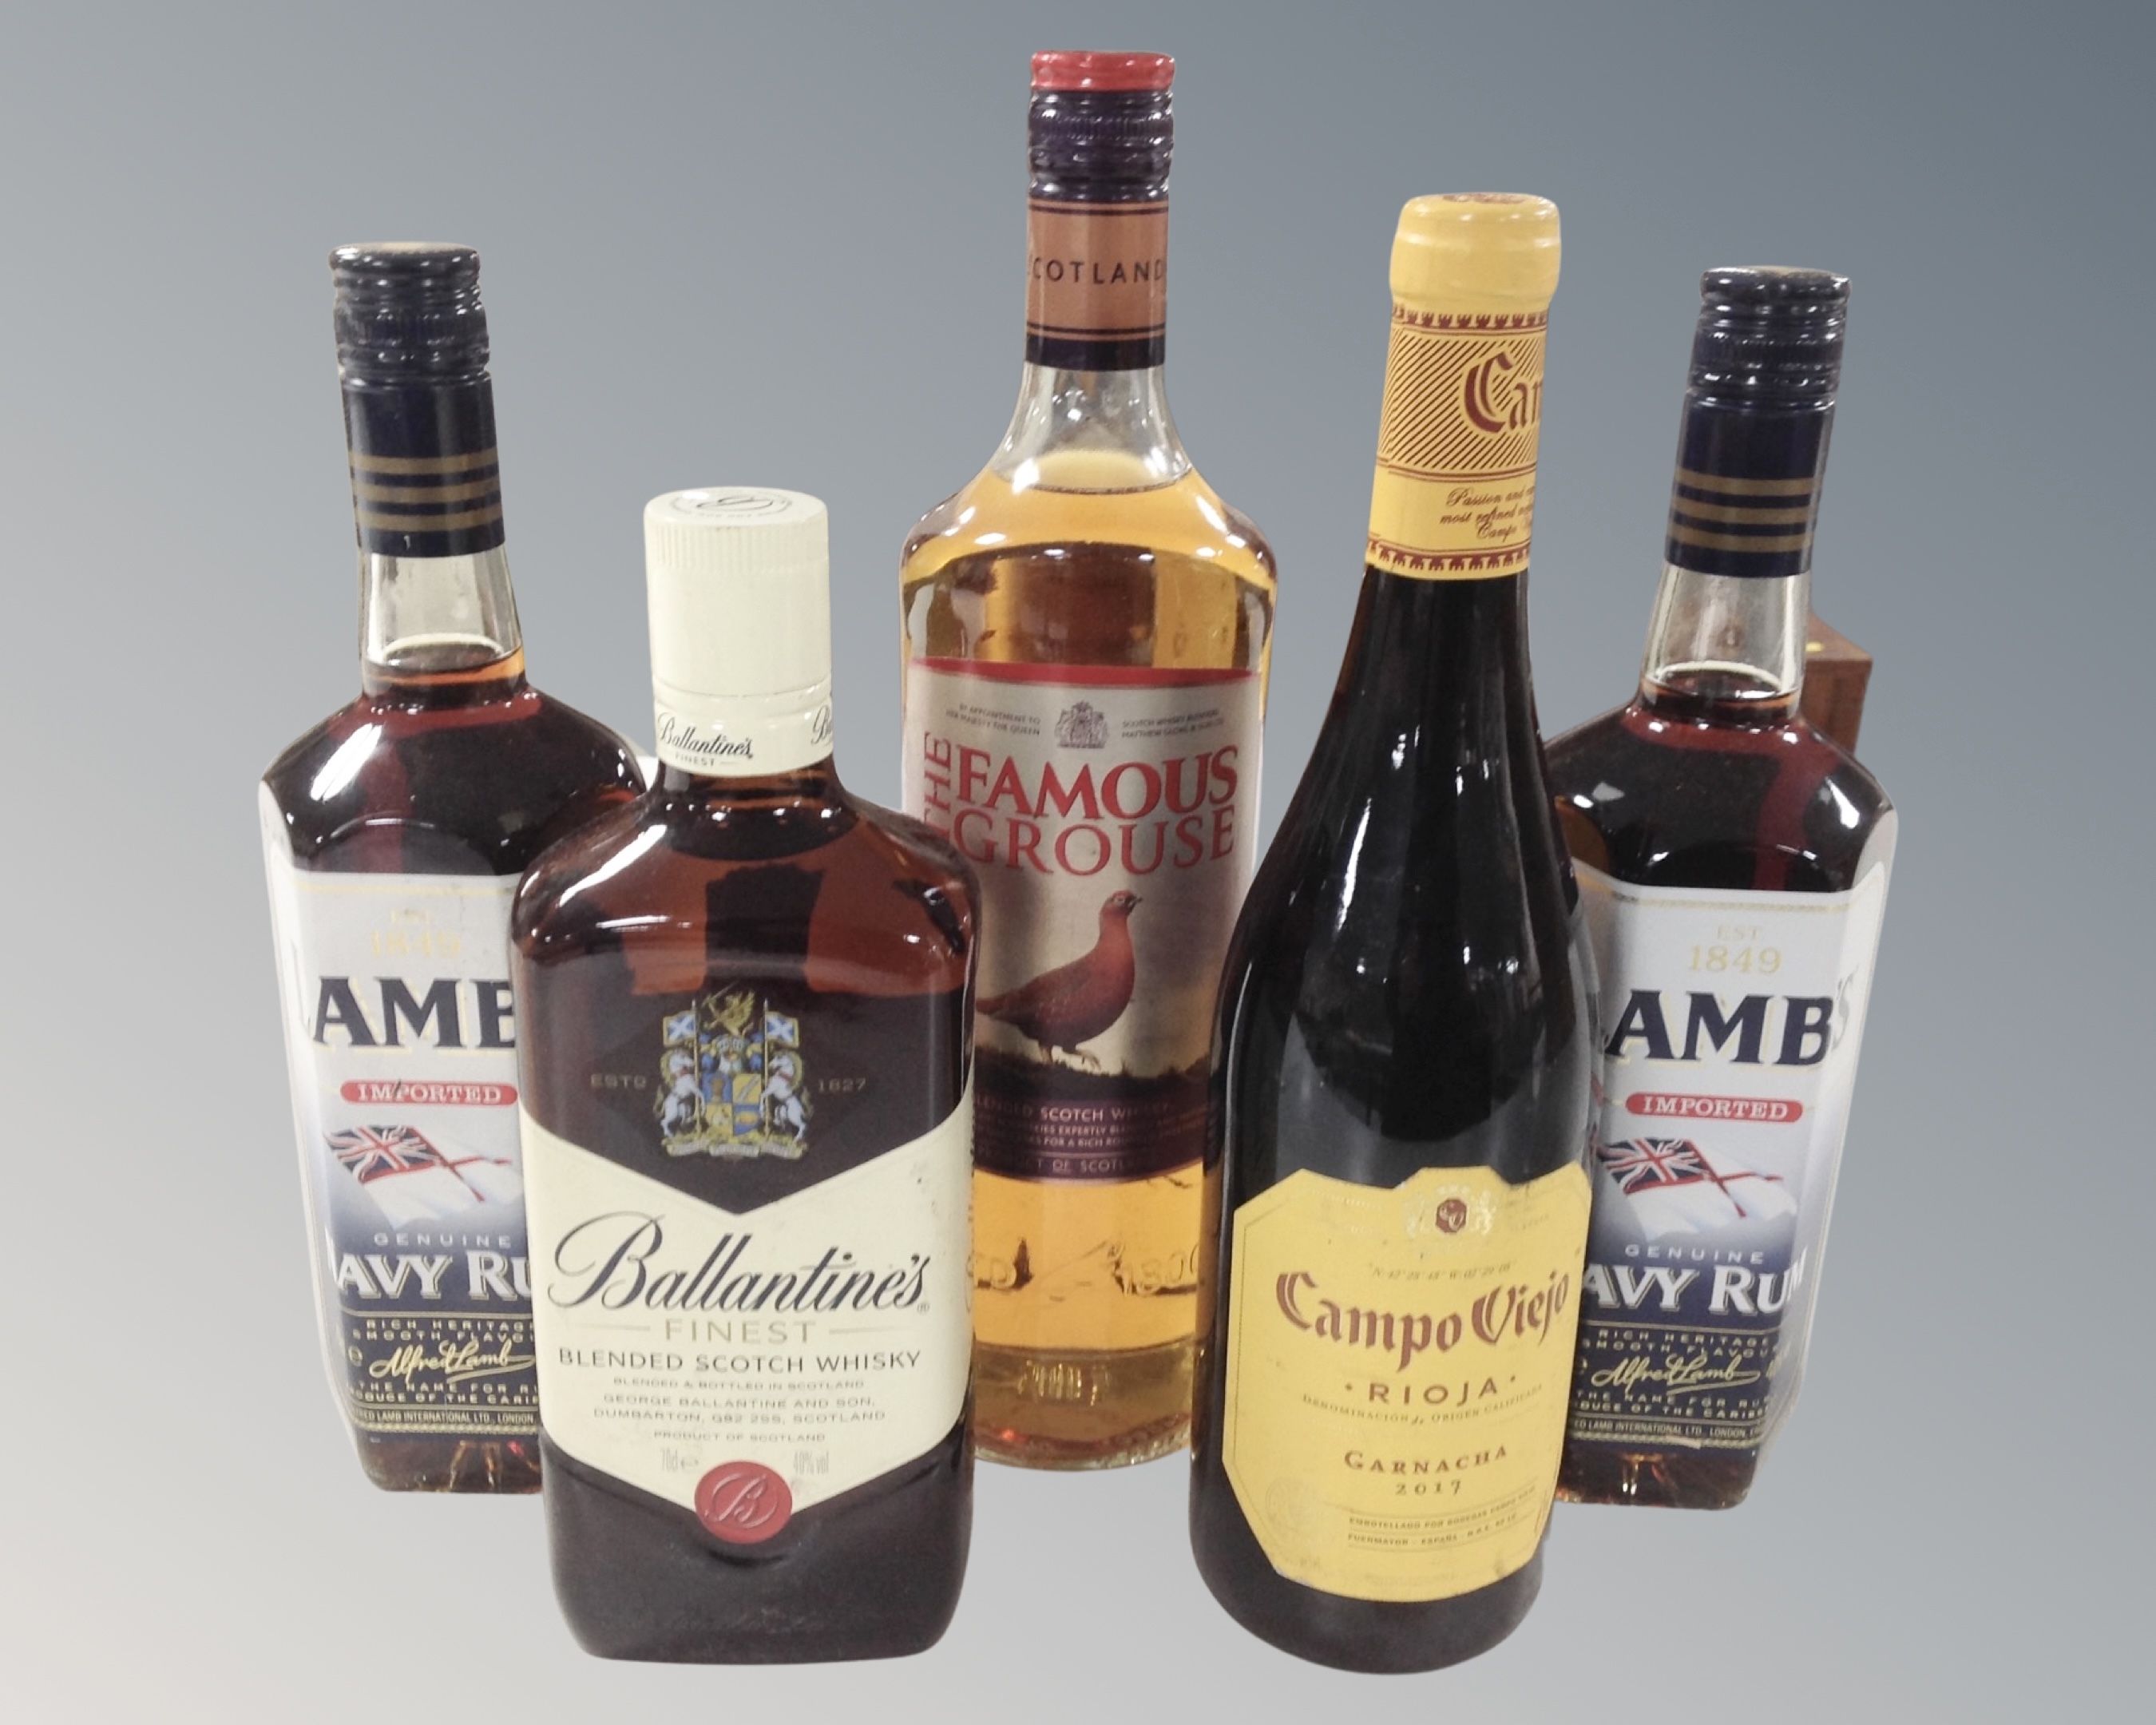 Two bottles of Lamb's Navy rum, bottle of Famous Grouse blended Scotch Whisky,